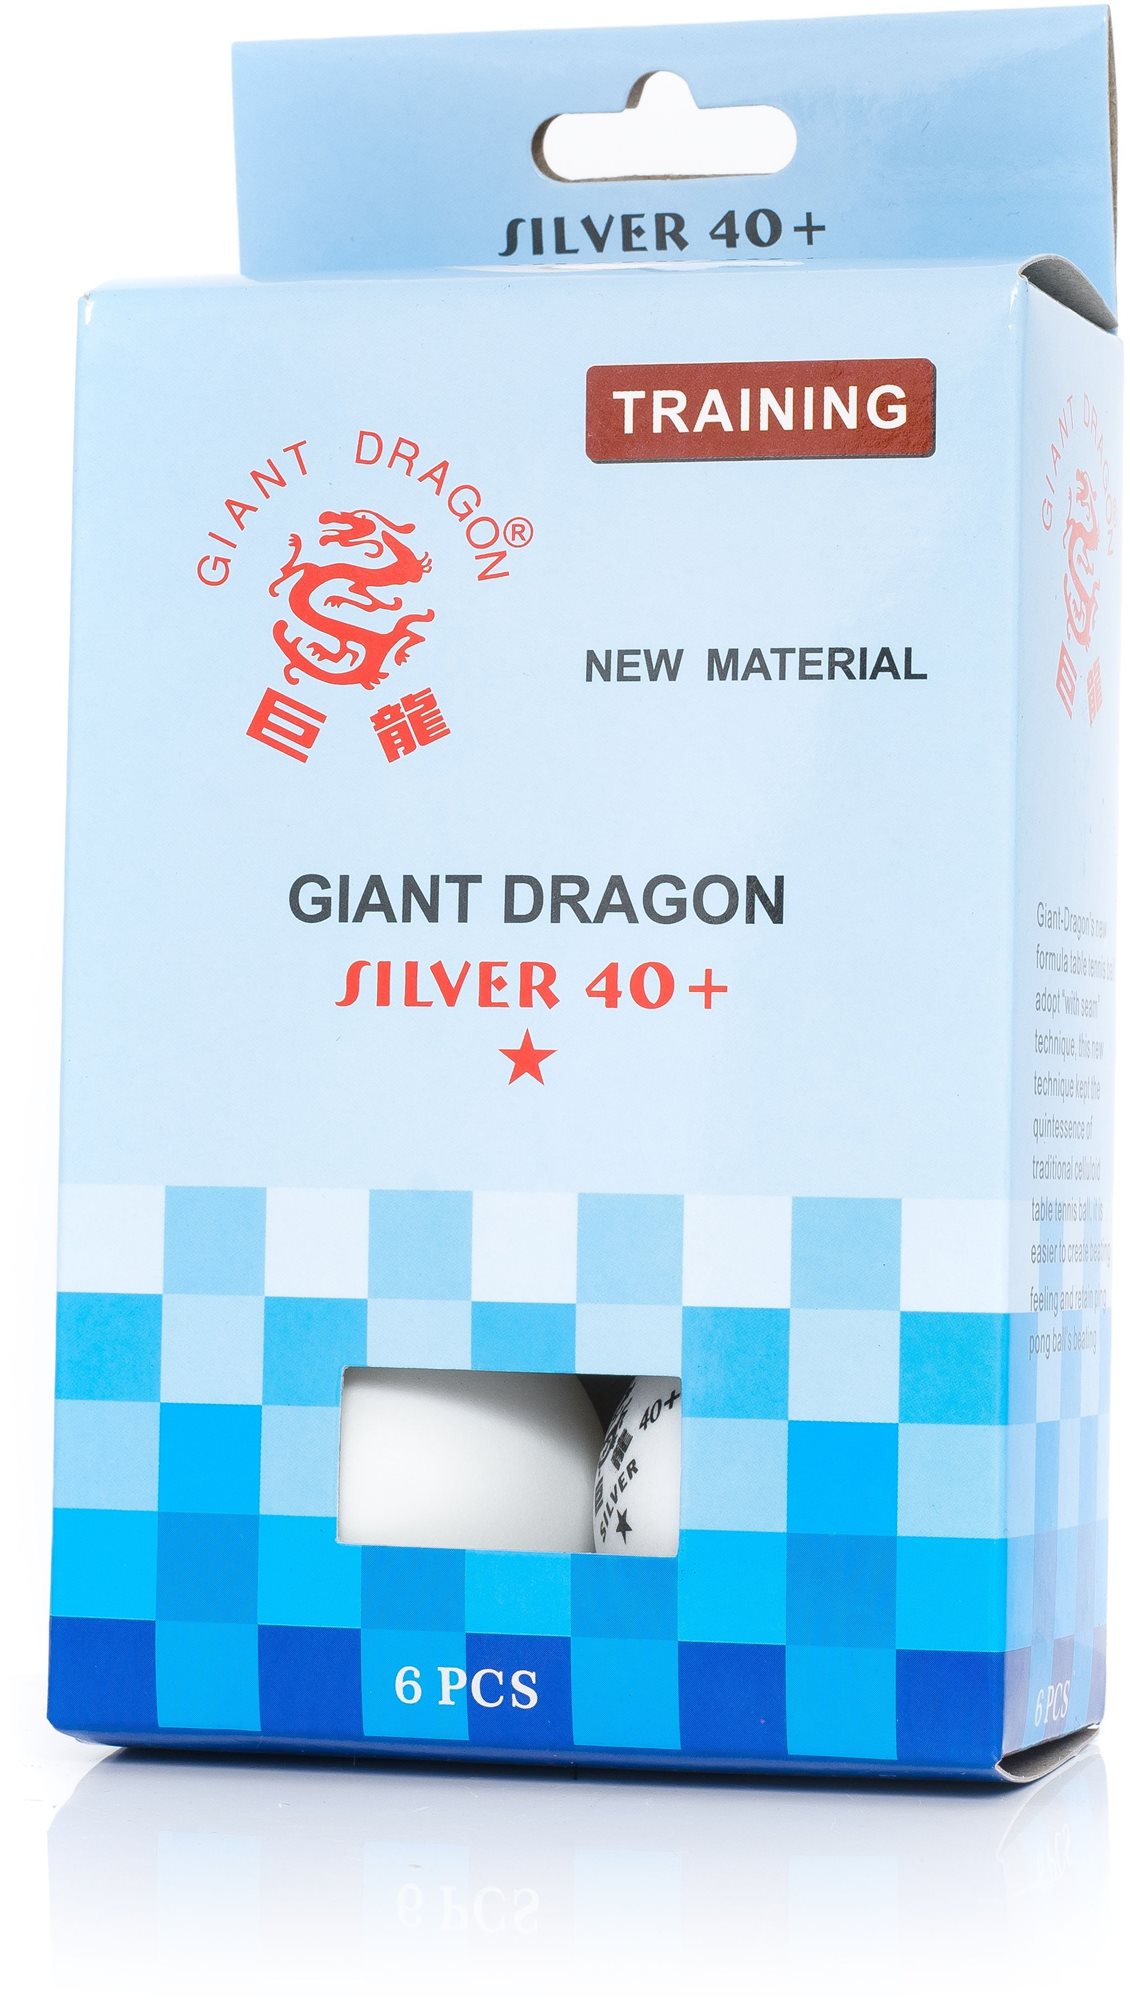 Pingponglabda Giant Dragon SILVER 40+ 1-STAR